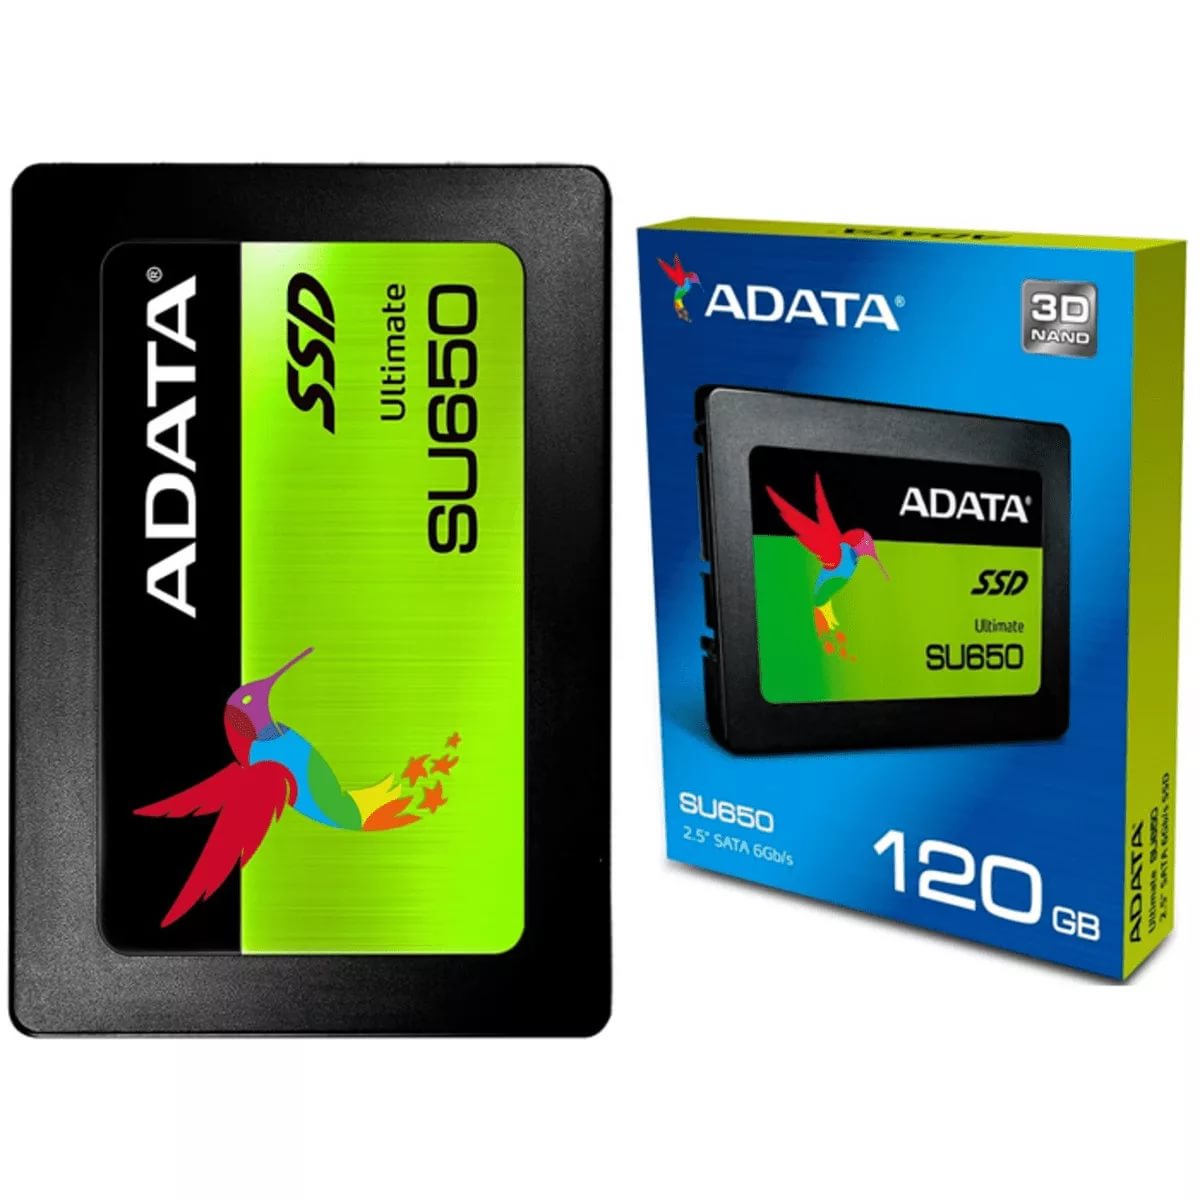 650 su. Твердотельный накопитель ADATA Ultimate su650 120gb. 120 ГБ 2.5" SATA накопитель ADATA su650 [asu650ss-120gt-r]. SSD 120 A data su650 120gb. Твердотельный накопитель ADATA 120 GB Ultimate su650 120gb (Retail).